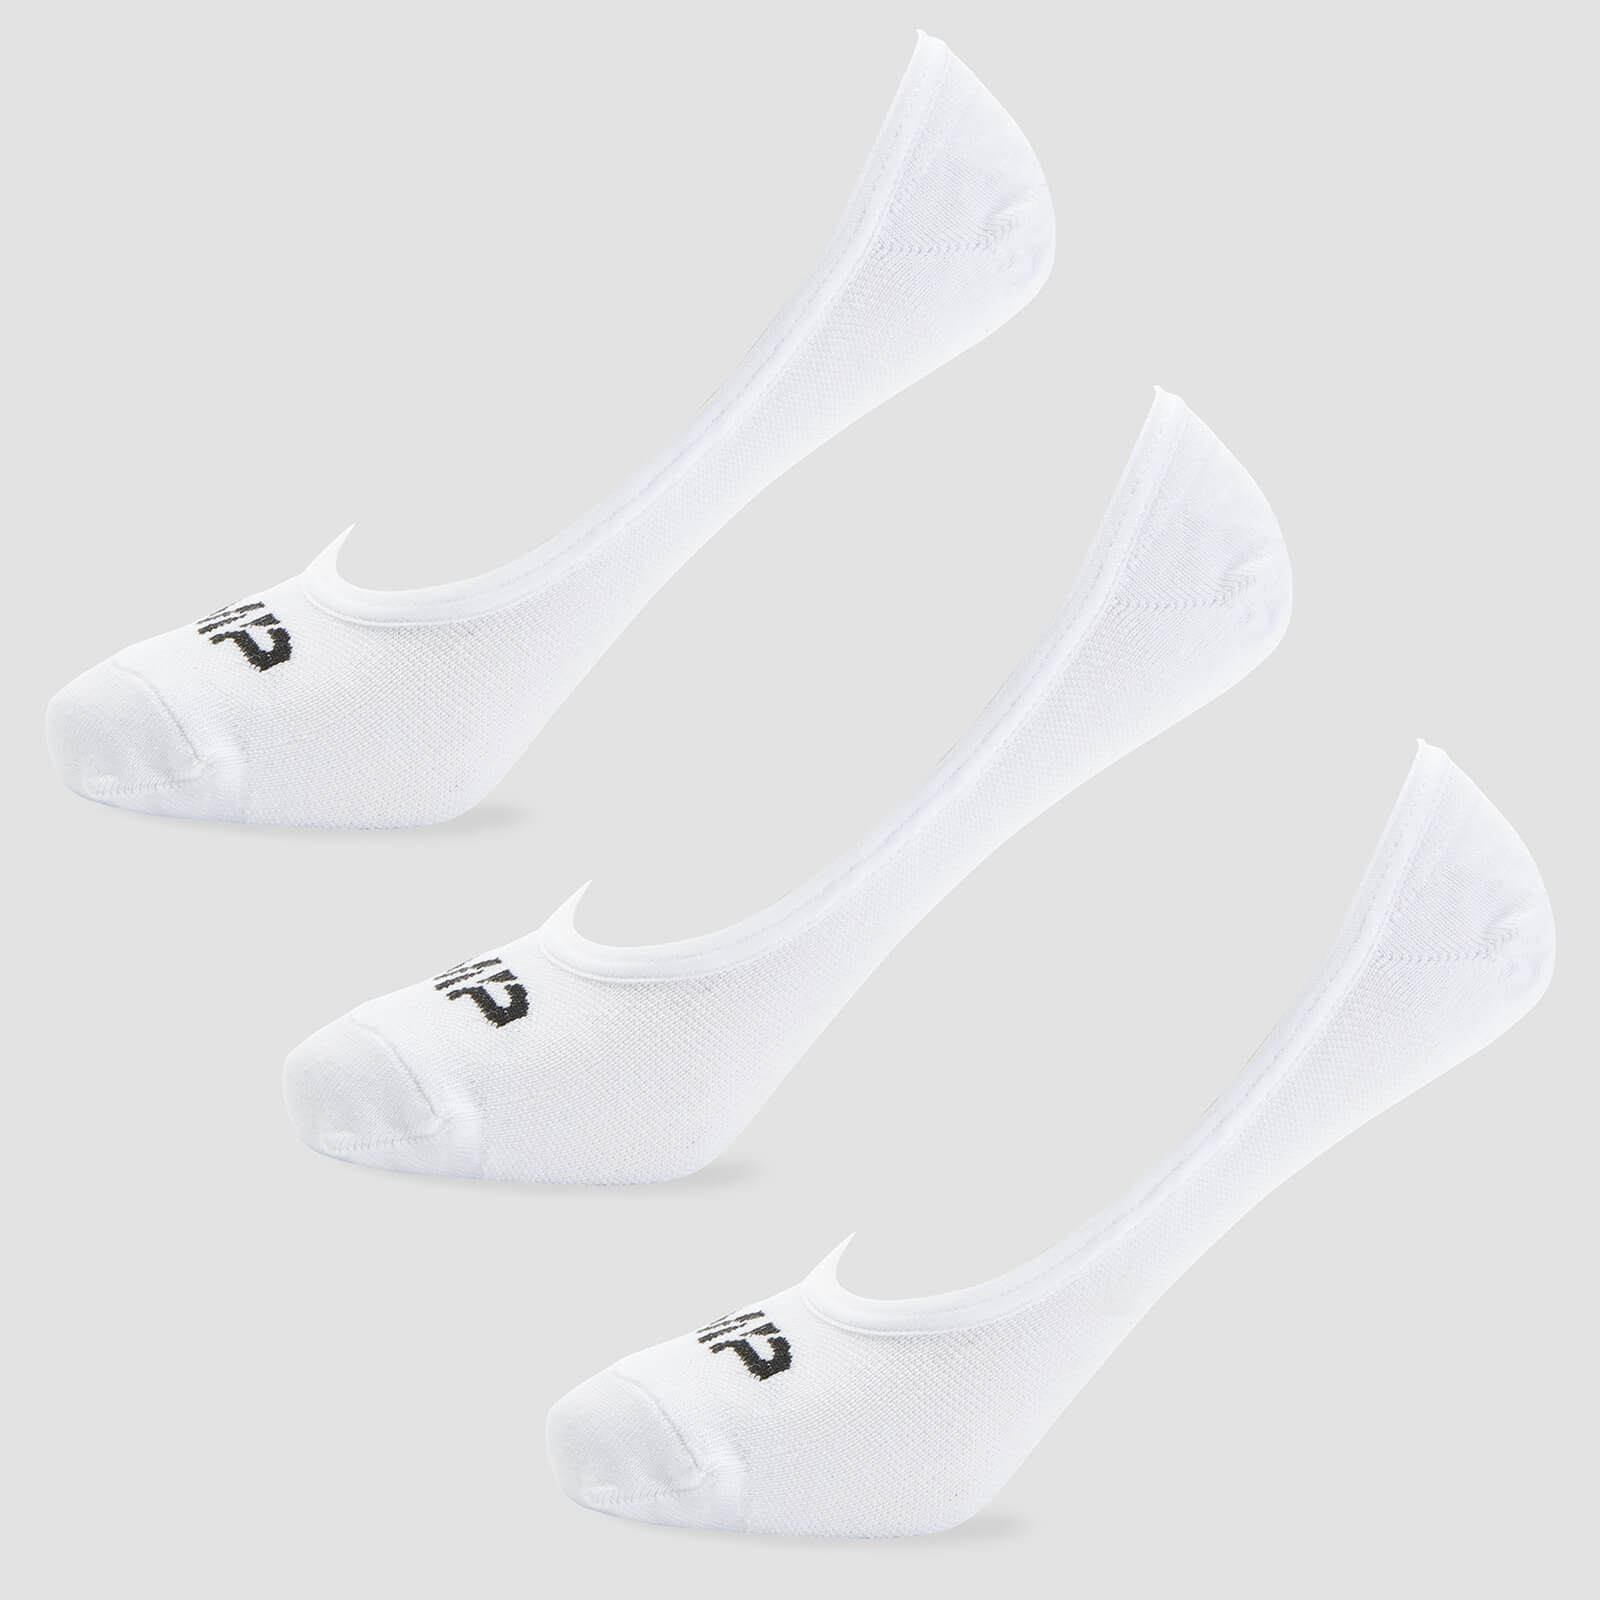 MP Men's Essentials Invisible Socks - White (3 Pack) - UK 6-8